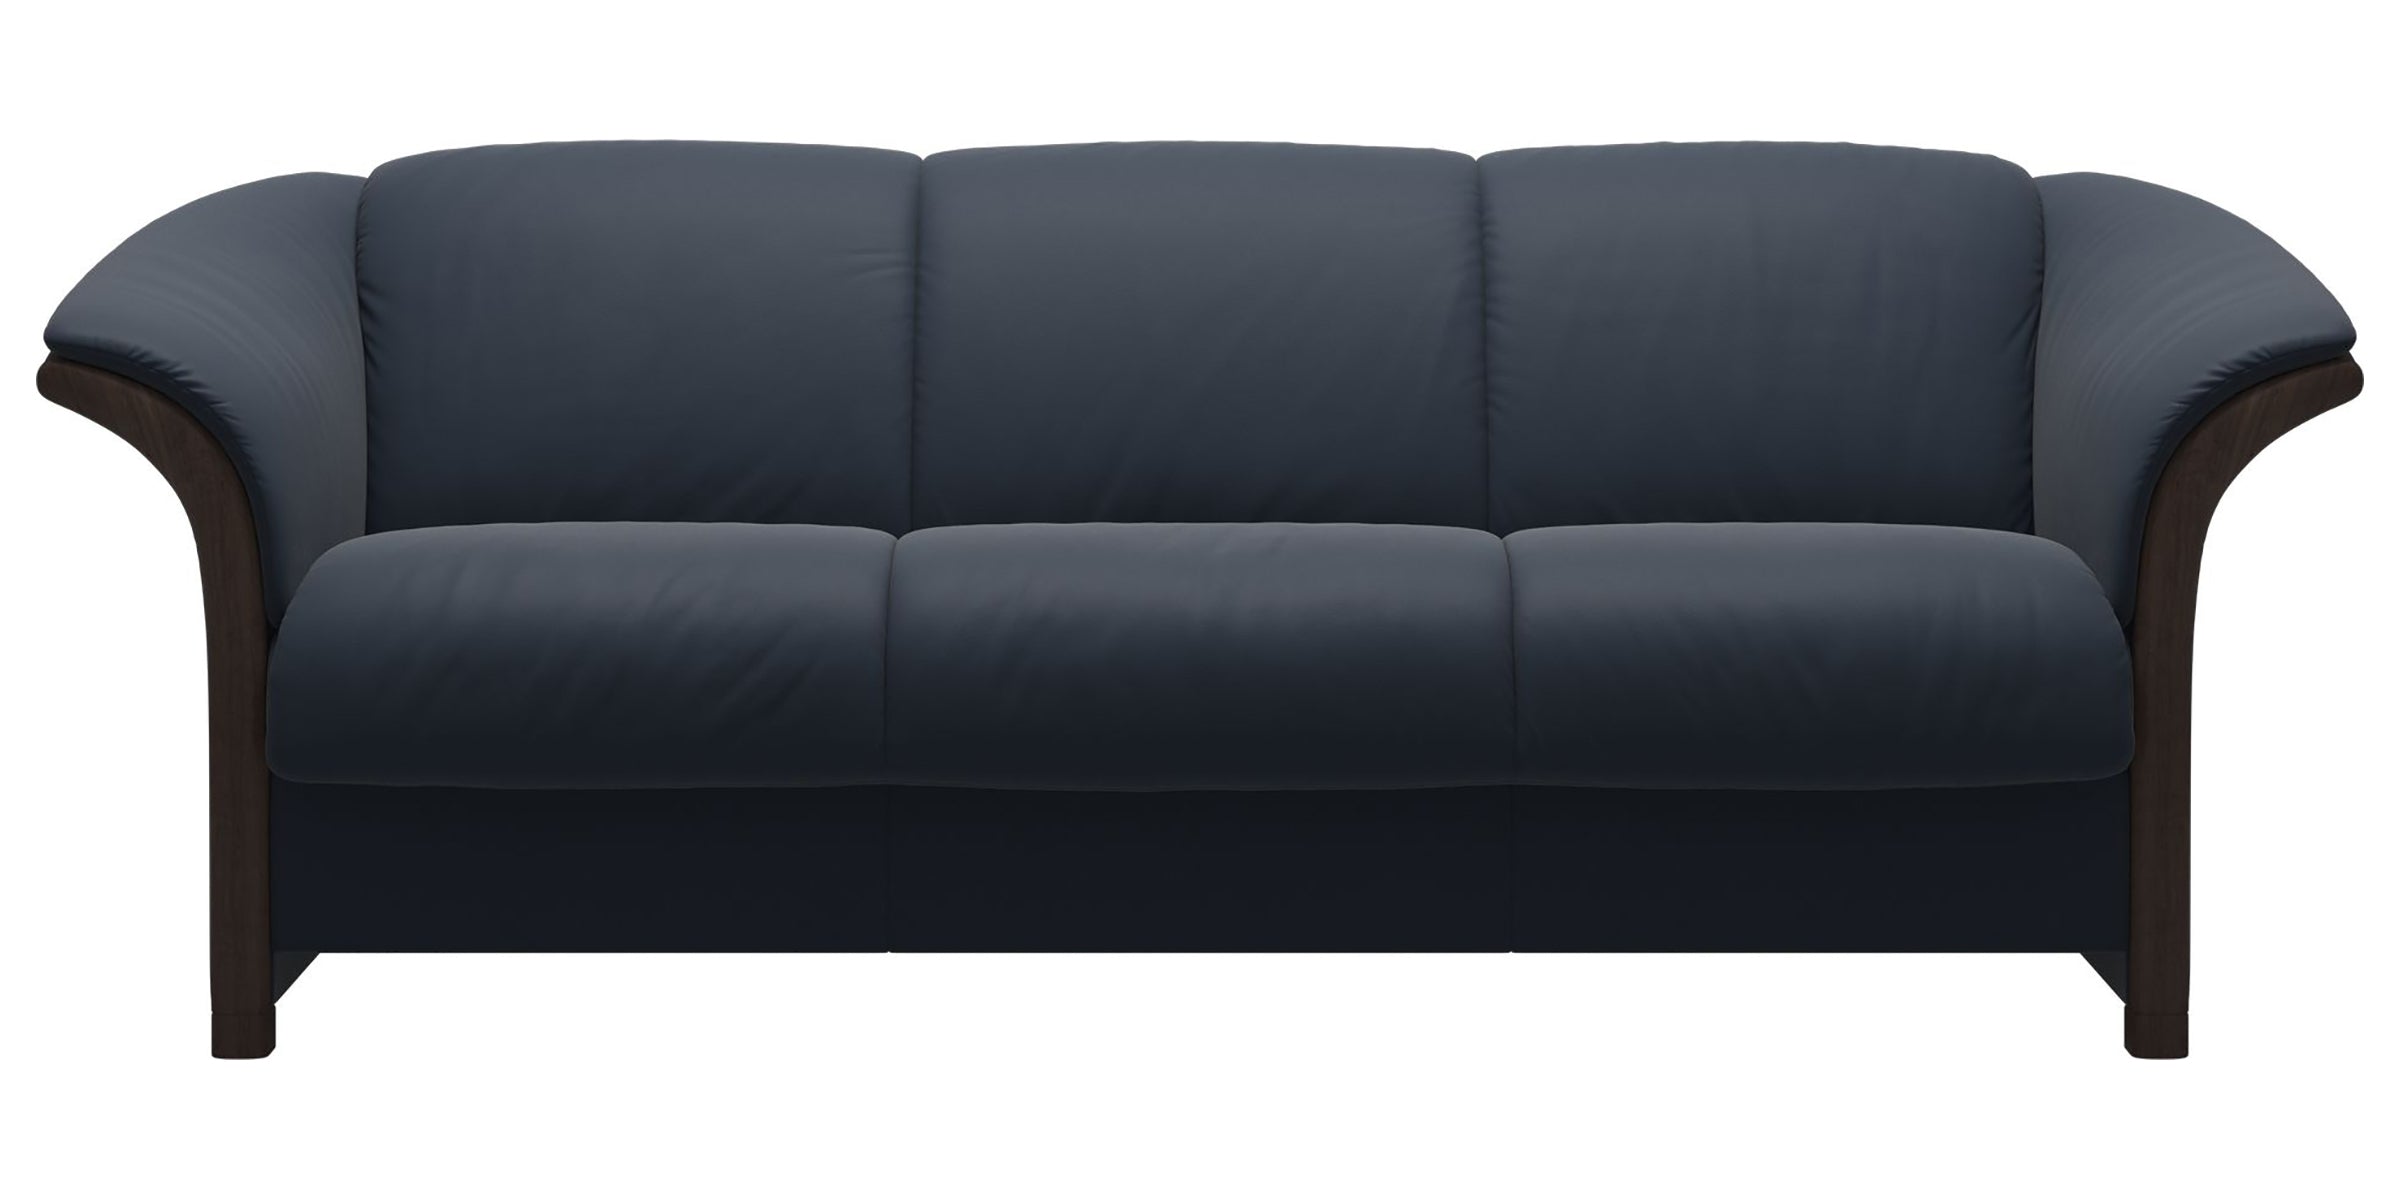 Paloma Leather Oxford Blue and Wenge Arm Trim | Stressless Manhattan Sofa | Valley Ridge Furniture